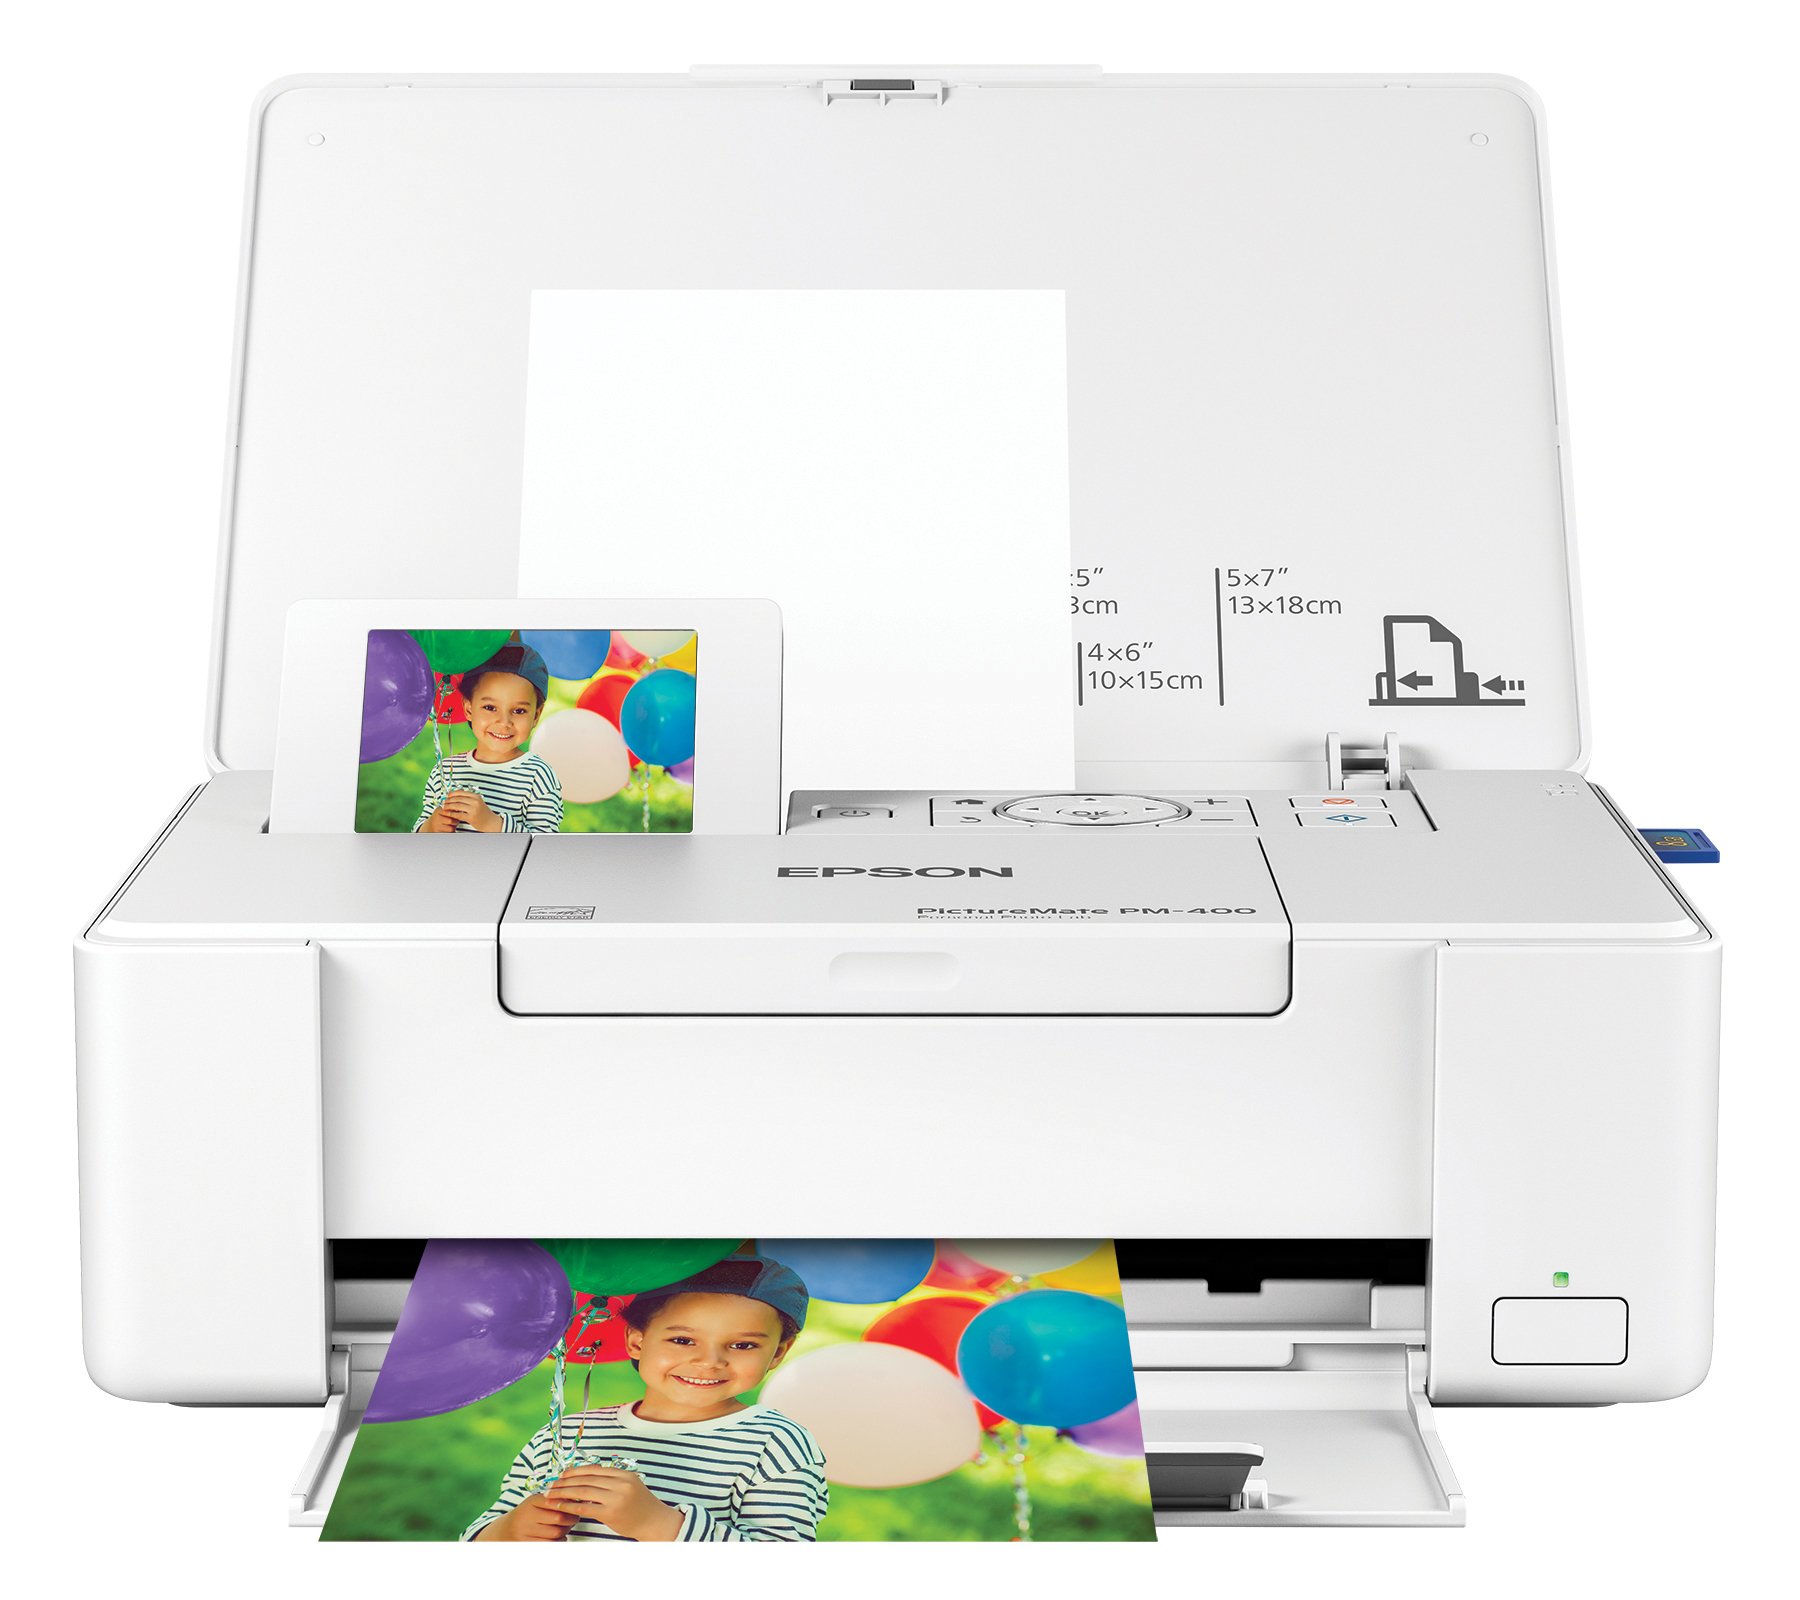 Epson Impressora fotográfica colorida compacta sem fio PictureMate PM-400